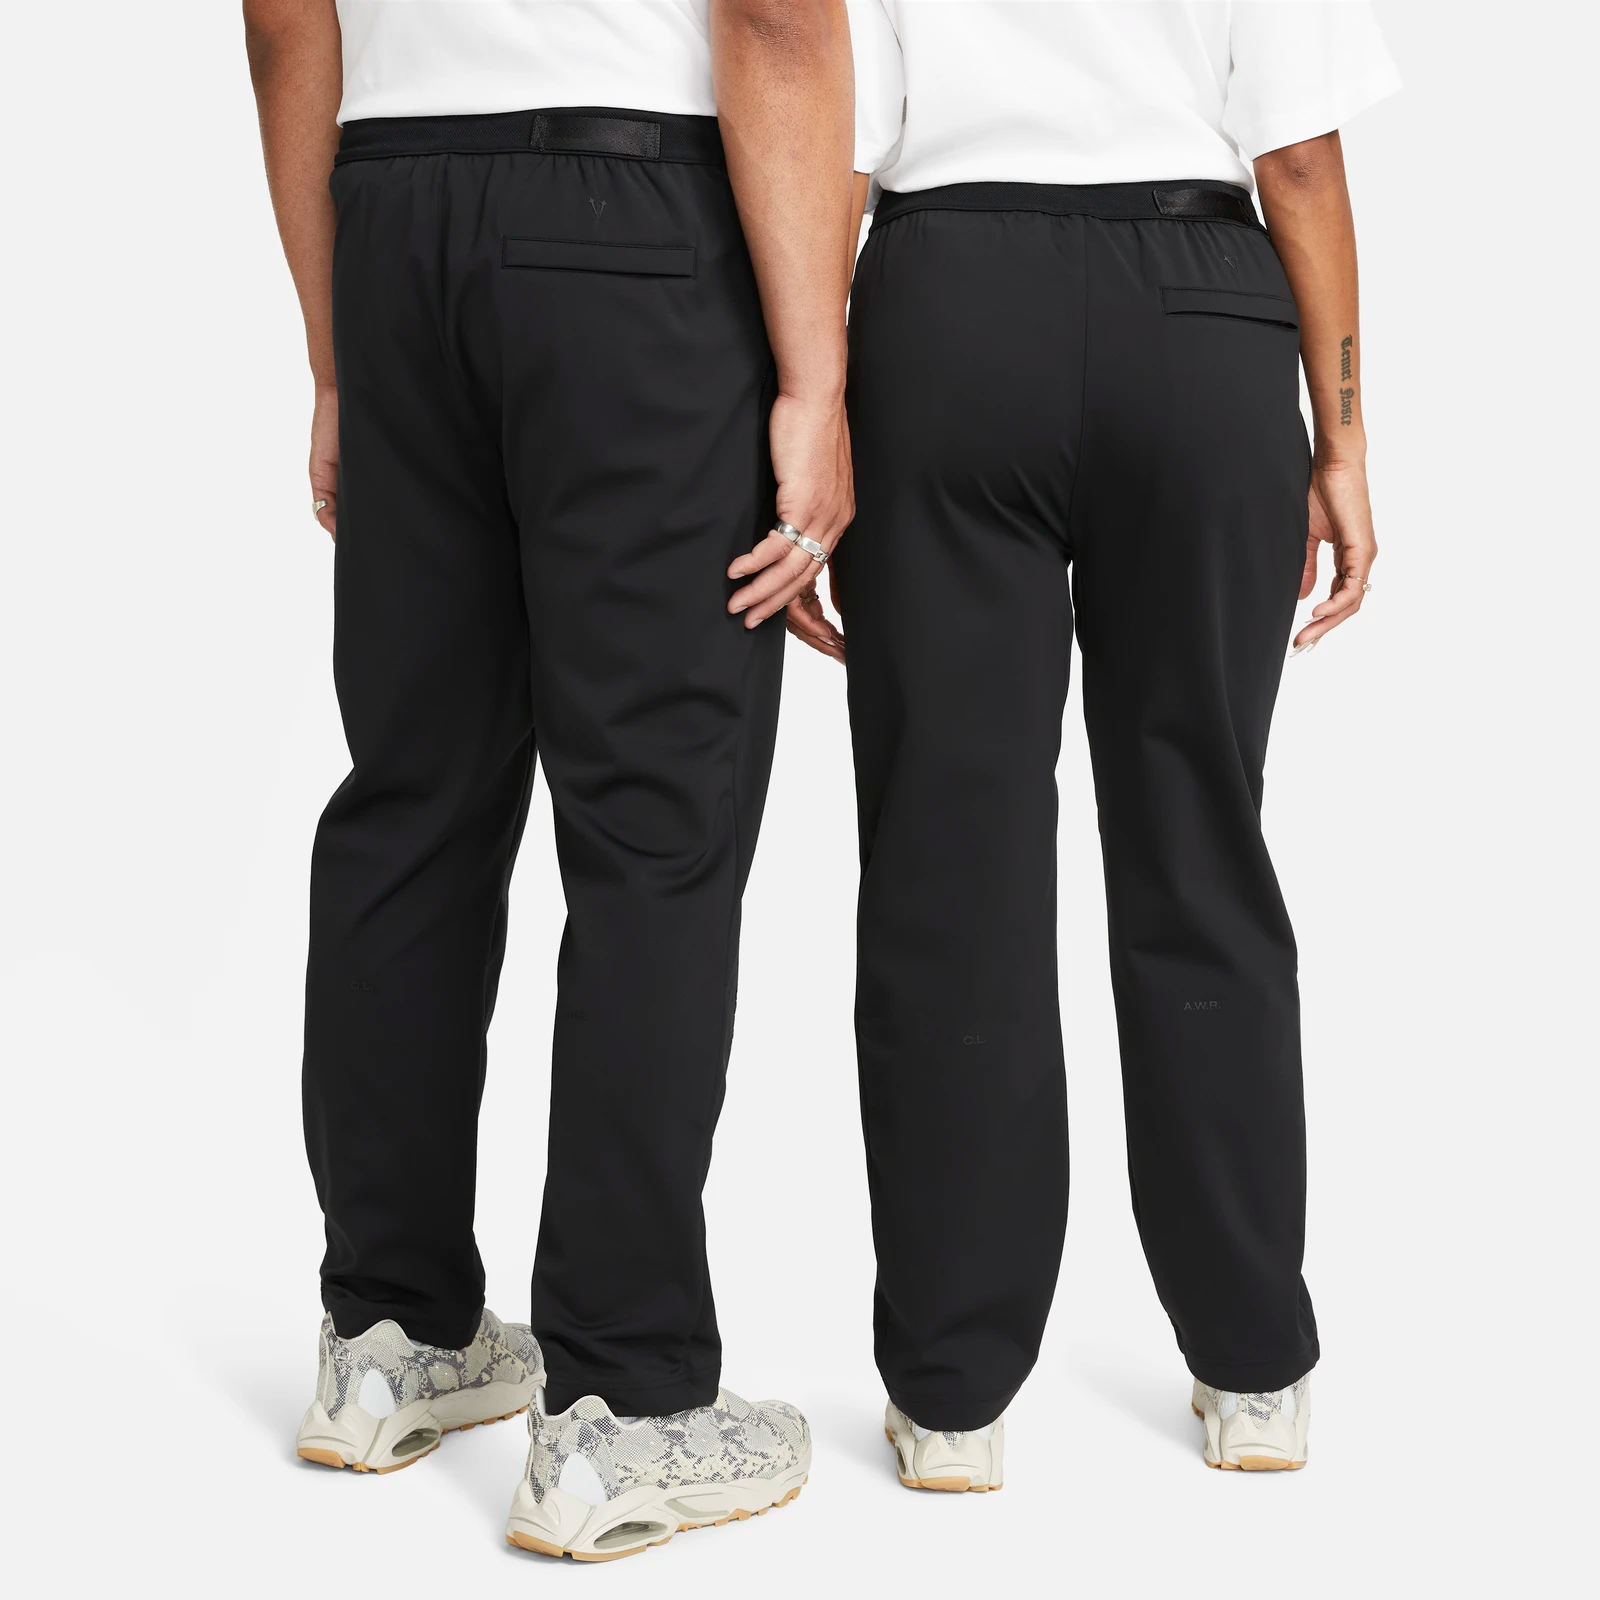 Nike NOCTA Pants Size XS – Recalled Shop